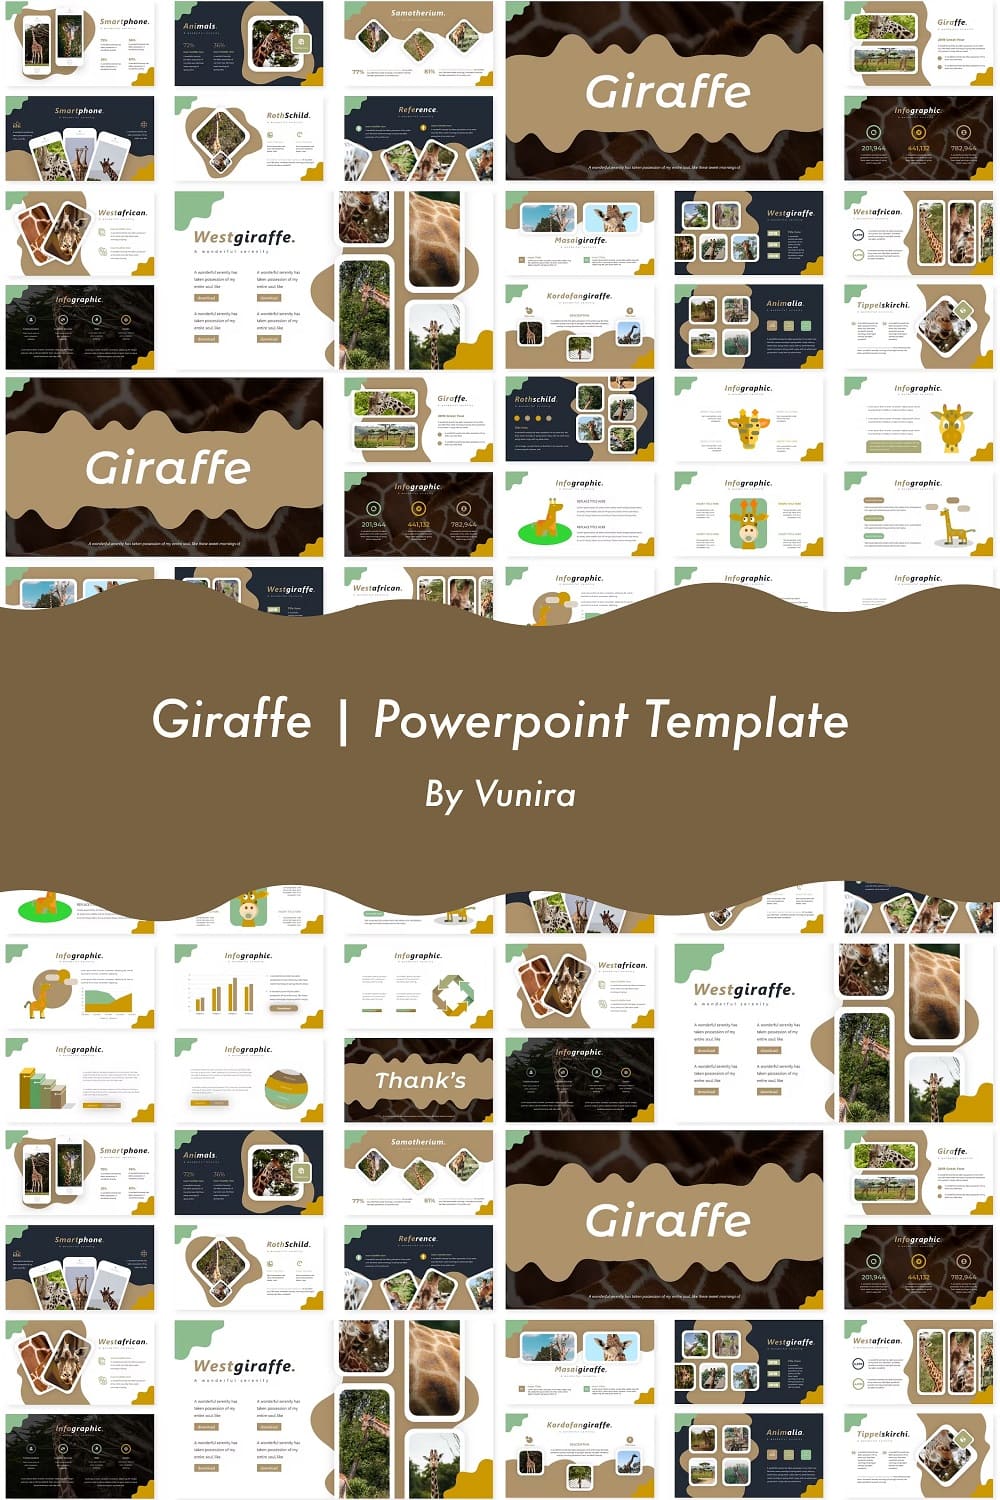 Infographic of Giraffe | Powerpoint Template.